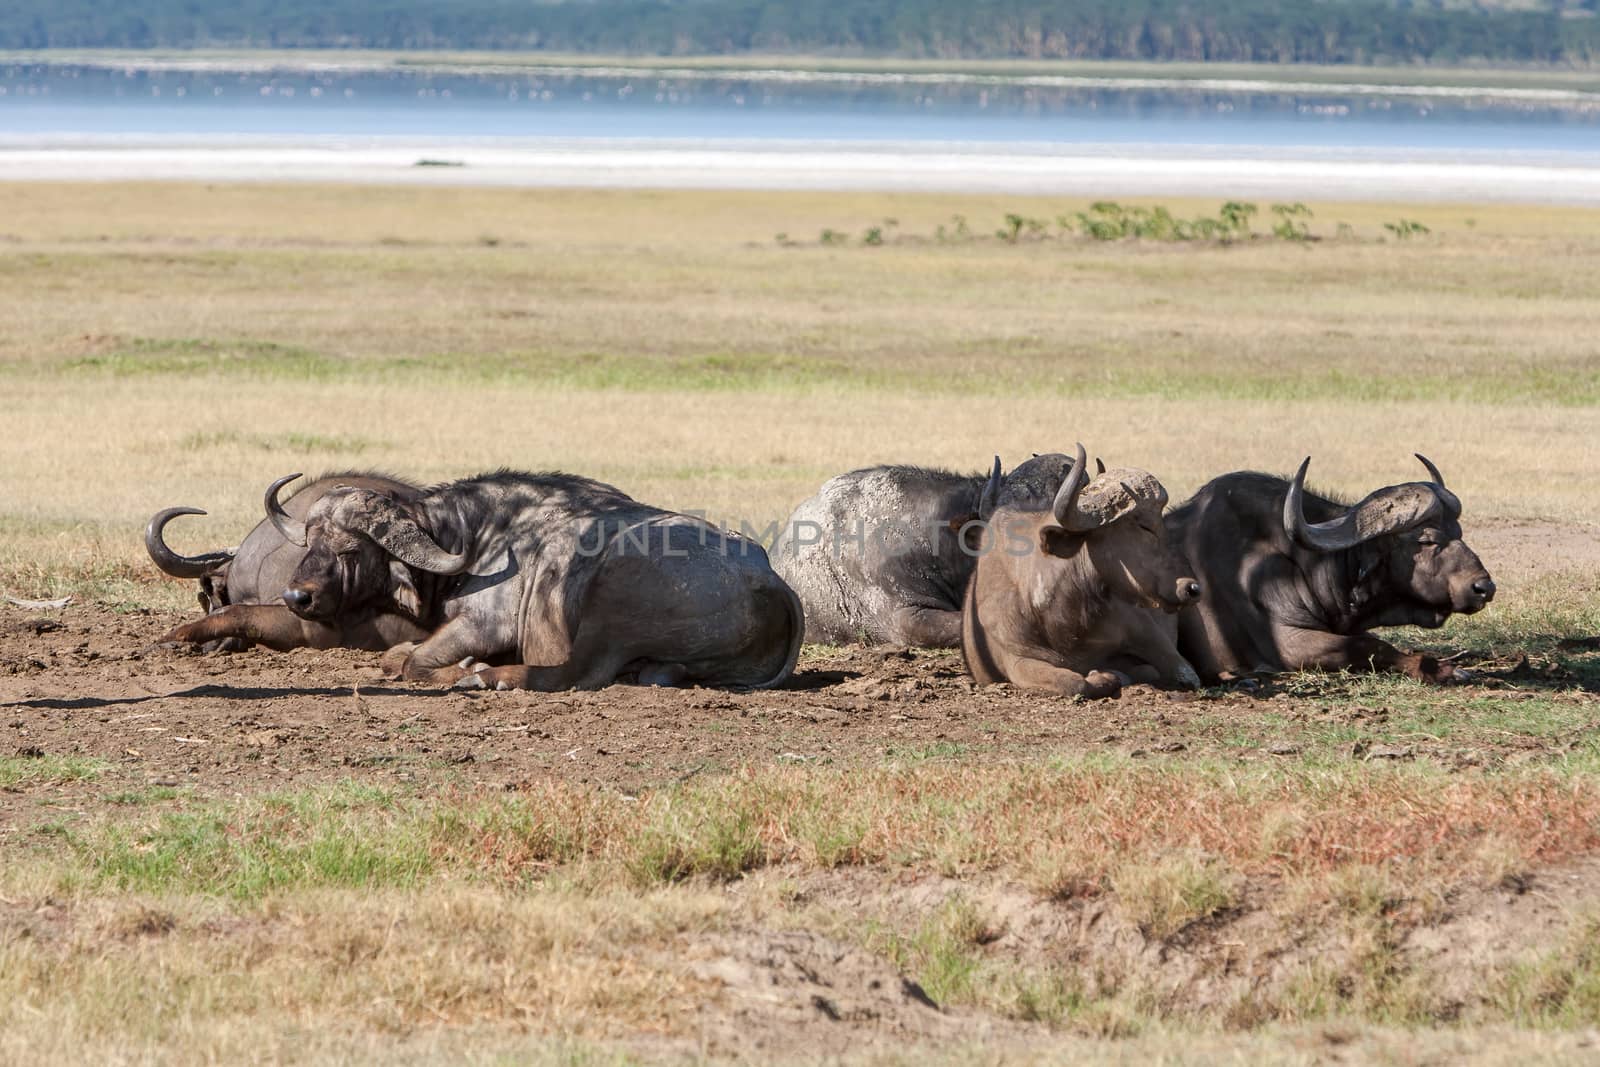 The wild black African Buffalos lie on the grass savanna in Kenya, Africa